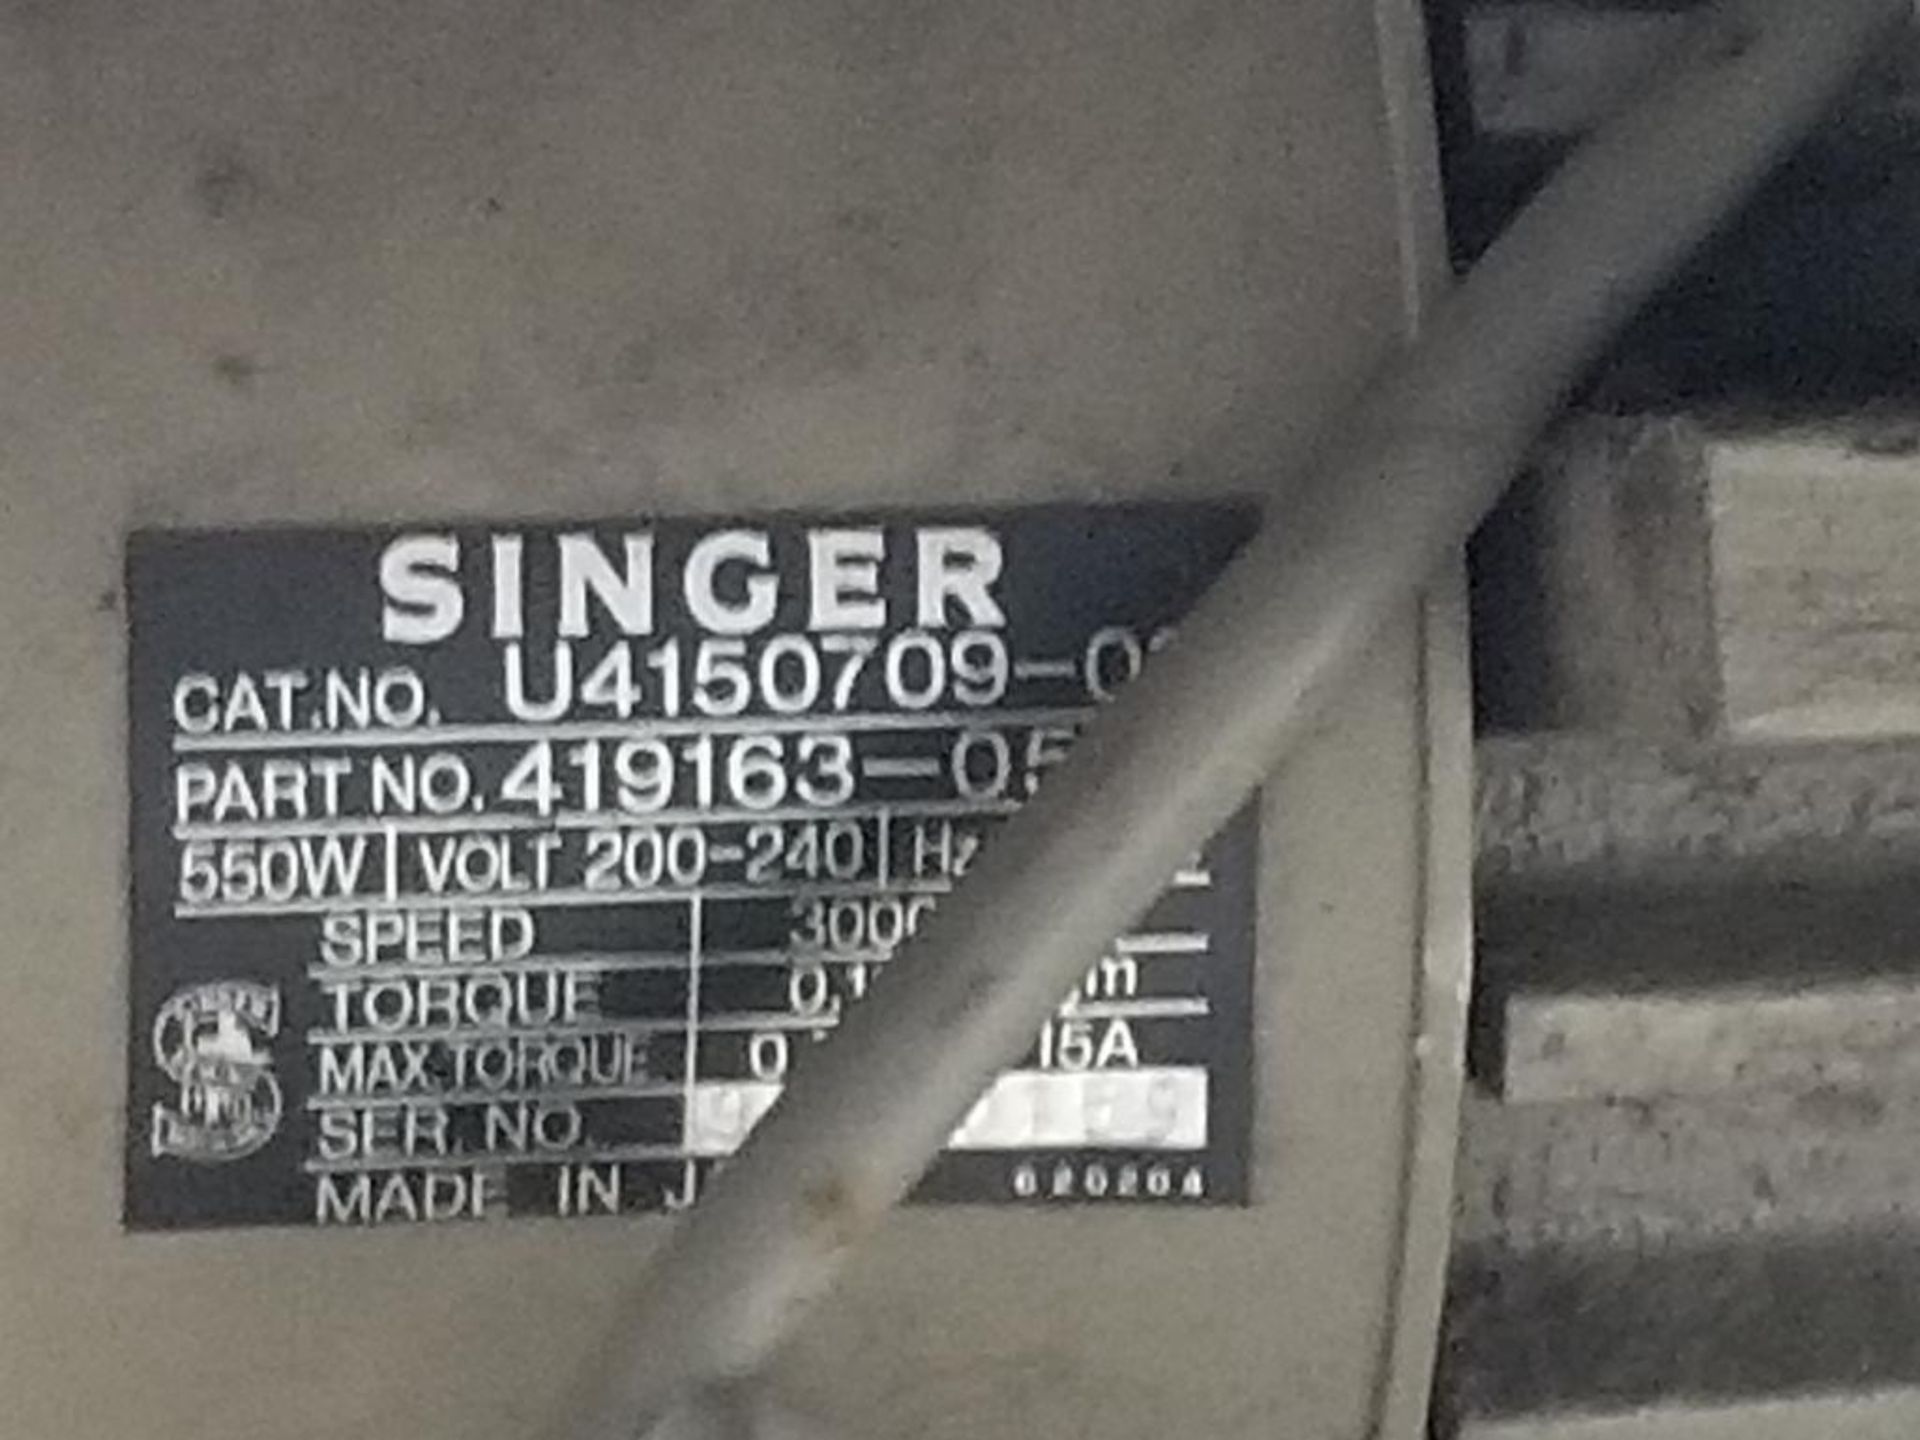 Singer single needle industrial sewing machine. Model 591. Serial #U921310412. 3 phase, 220-240v. - Image 5 of 7